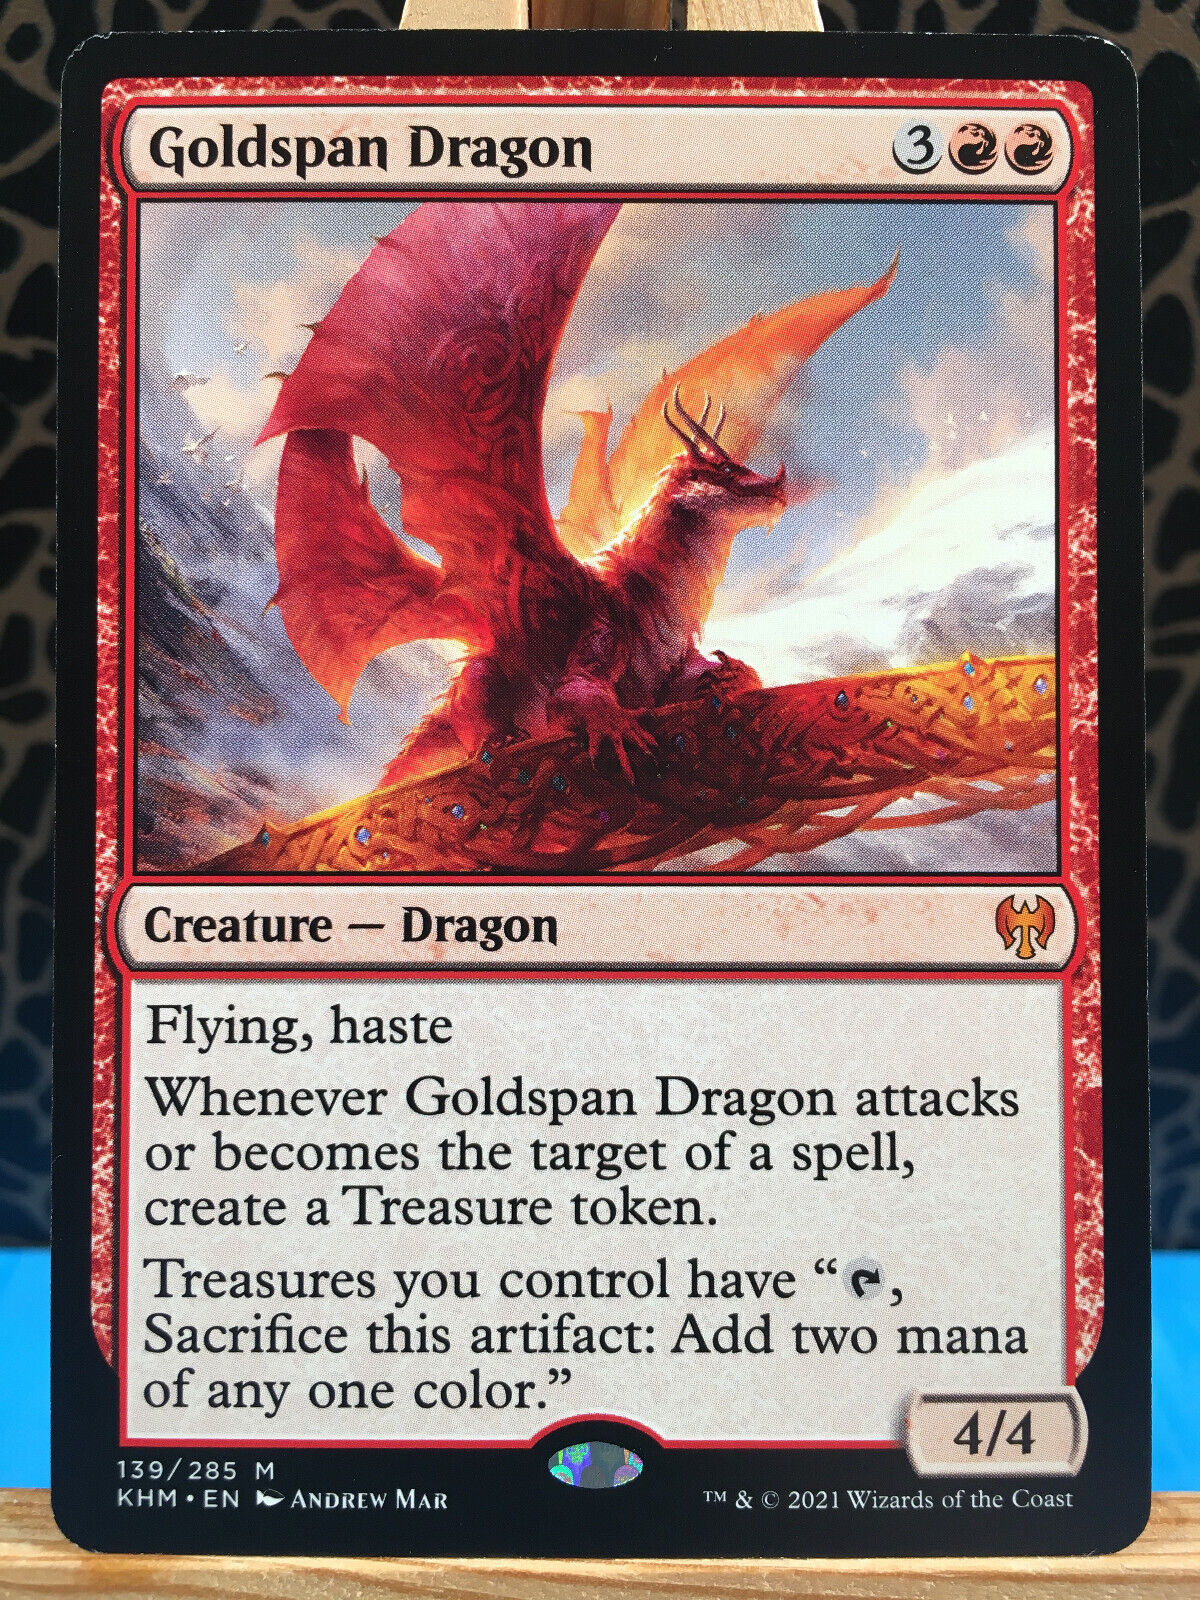 MTG - Goldspan Dragon. Kaldheim. Red - Mythic Creature - Dragon.